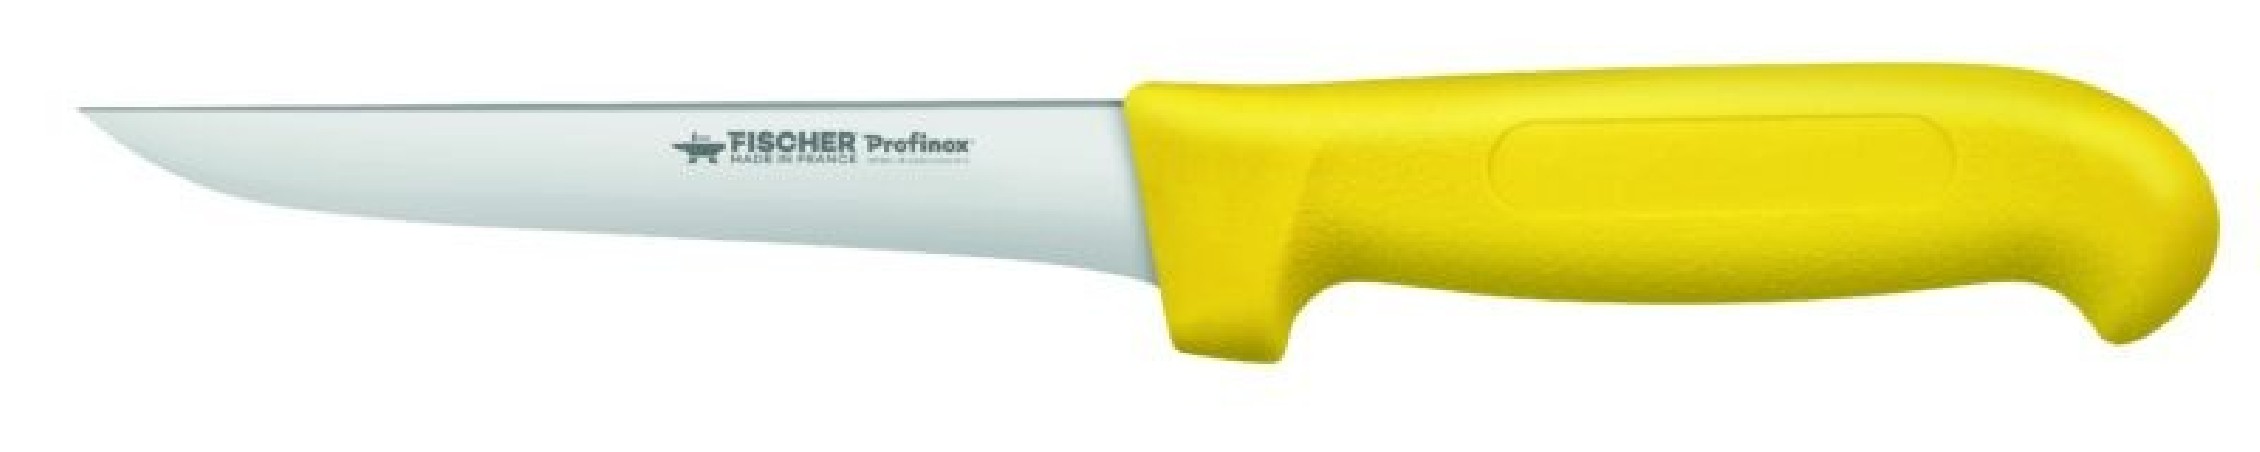 FISCHER 14CM BONING KNIFE STRAIGHT BLADE PROFINOX HANDLE YELLOW 4015-14